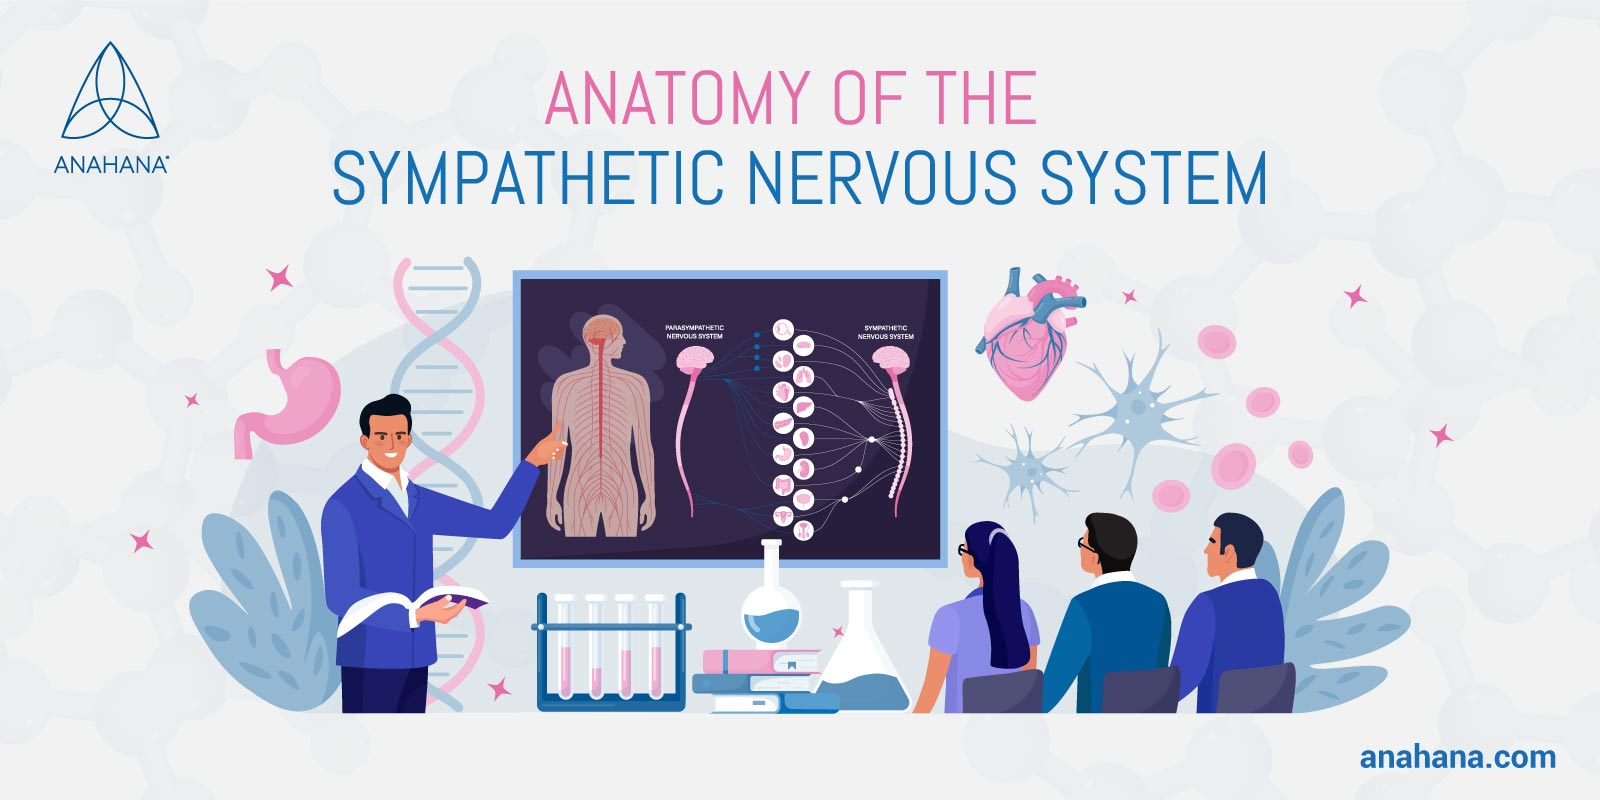 Anatomy of the Sympathetic Nervous System